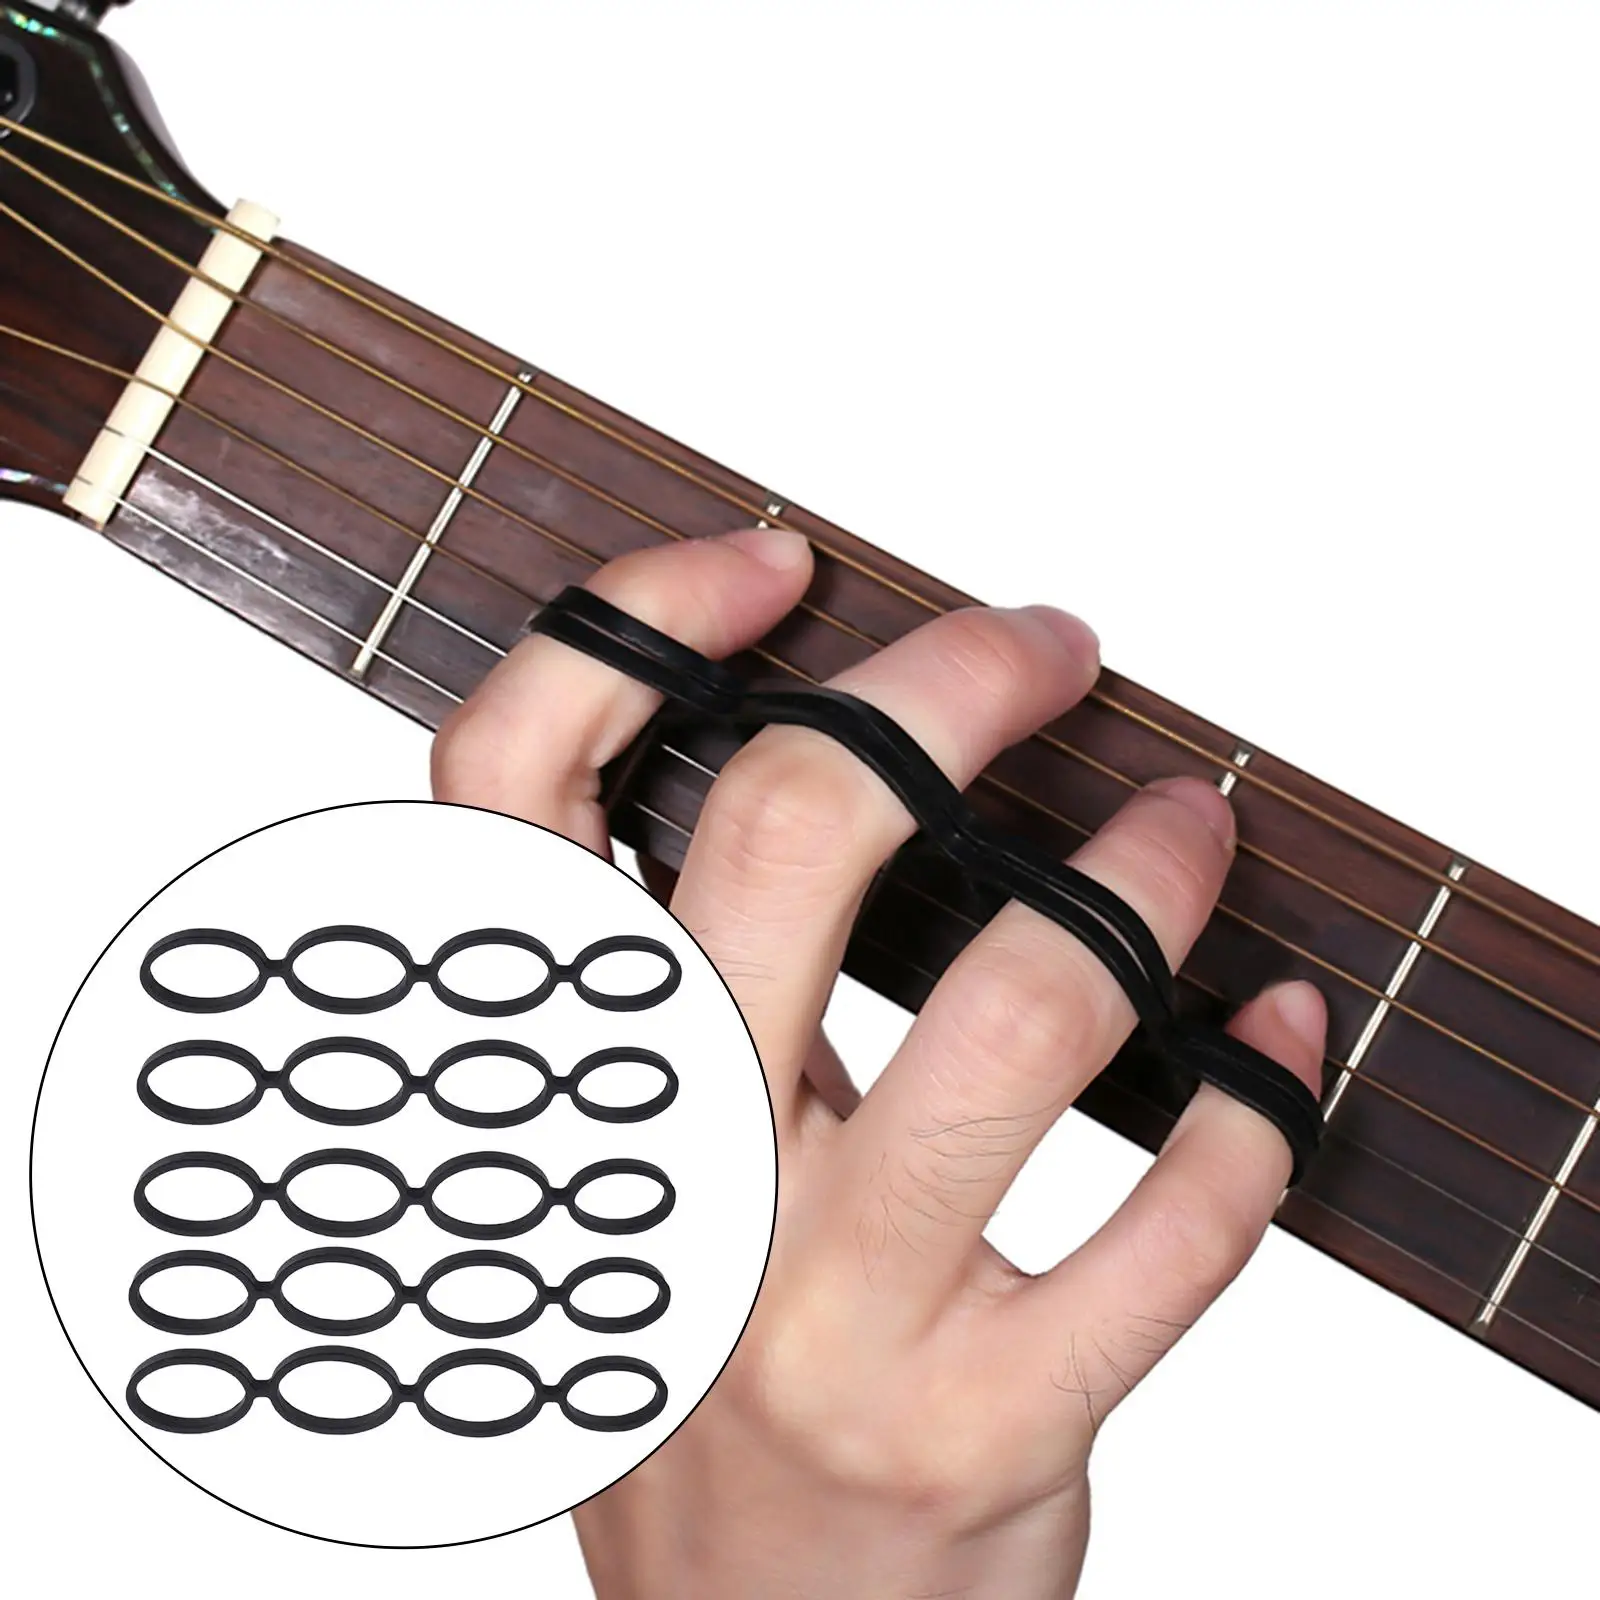 Finger Strengthener Portable Finger Exerciser Force Span Practing Resistance Training Bands for Strings Musical Instruments